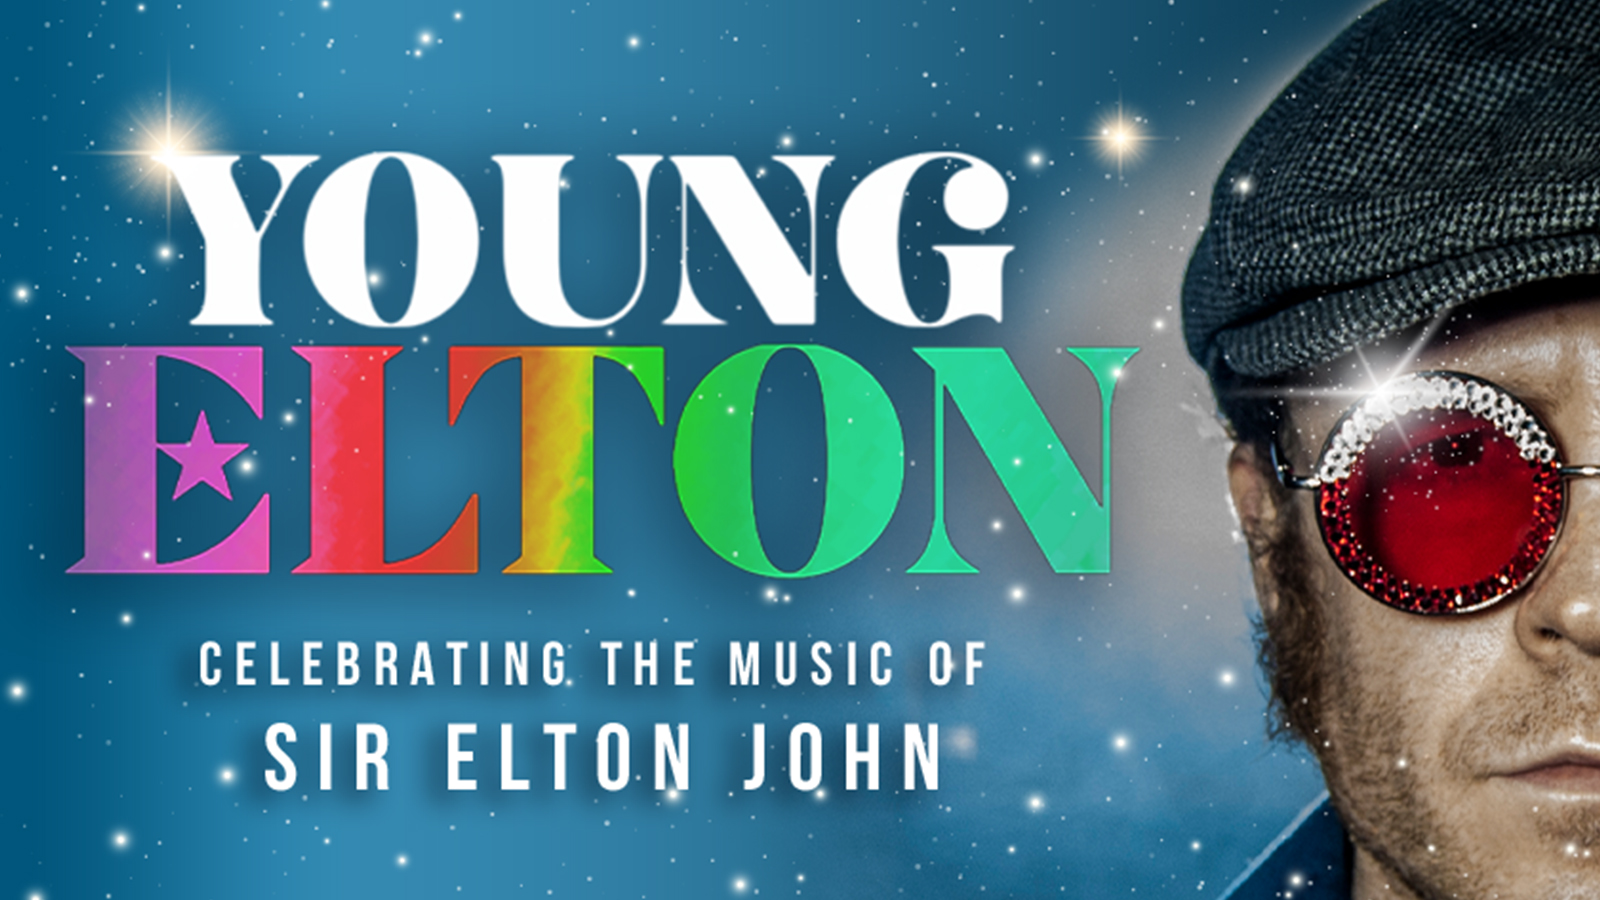 🚀 YOUNG ELTON 🚀 – the ultimate tribute celebrating the music of Sir Elton John